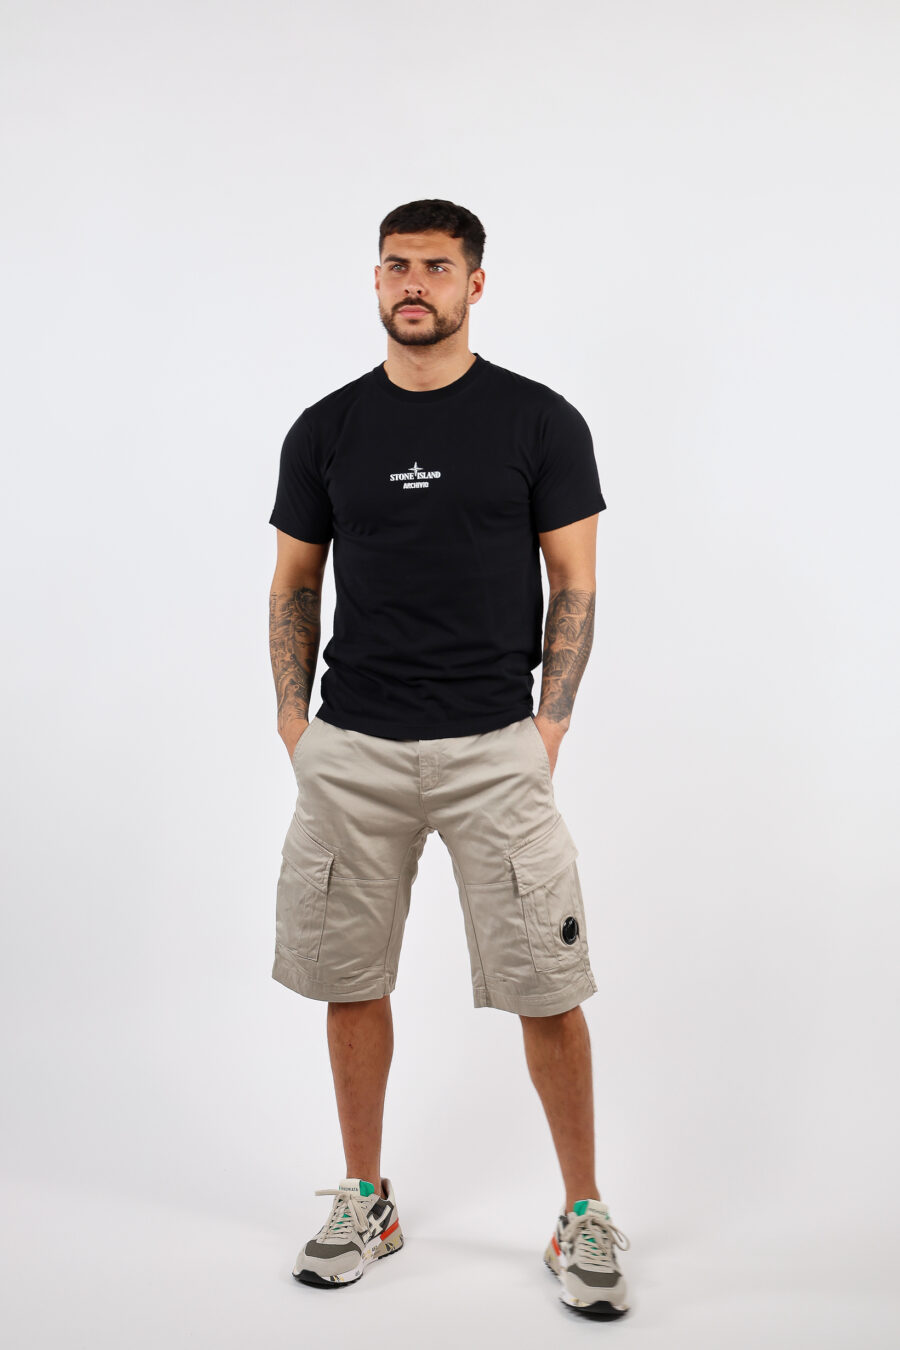 T-shirt preta com mini-logotipo "archivio" centrado - BLS Fashion 150